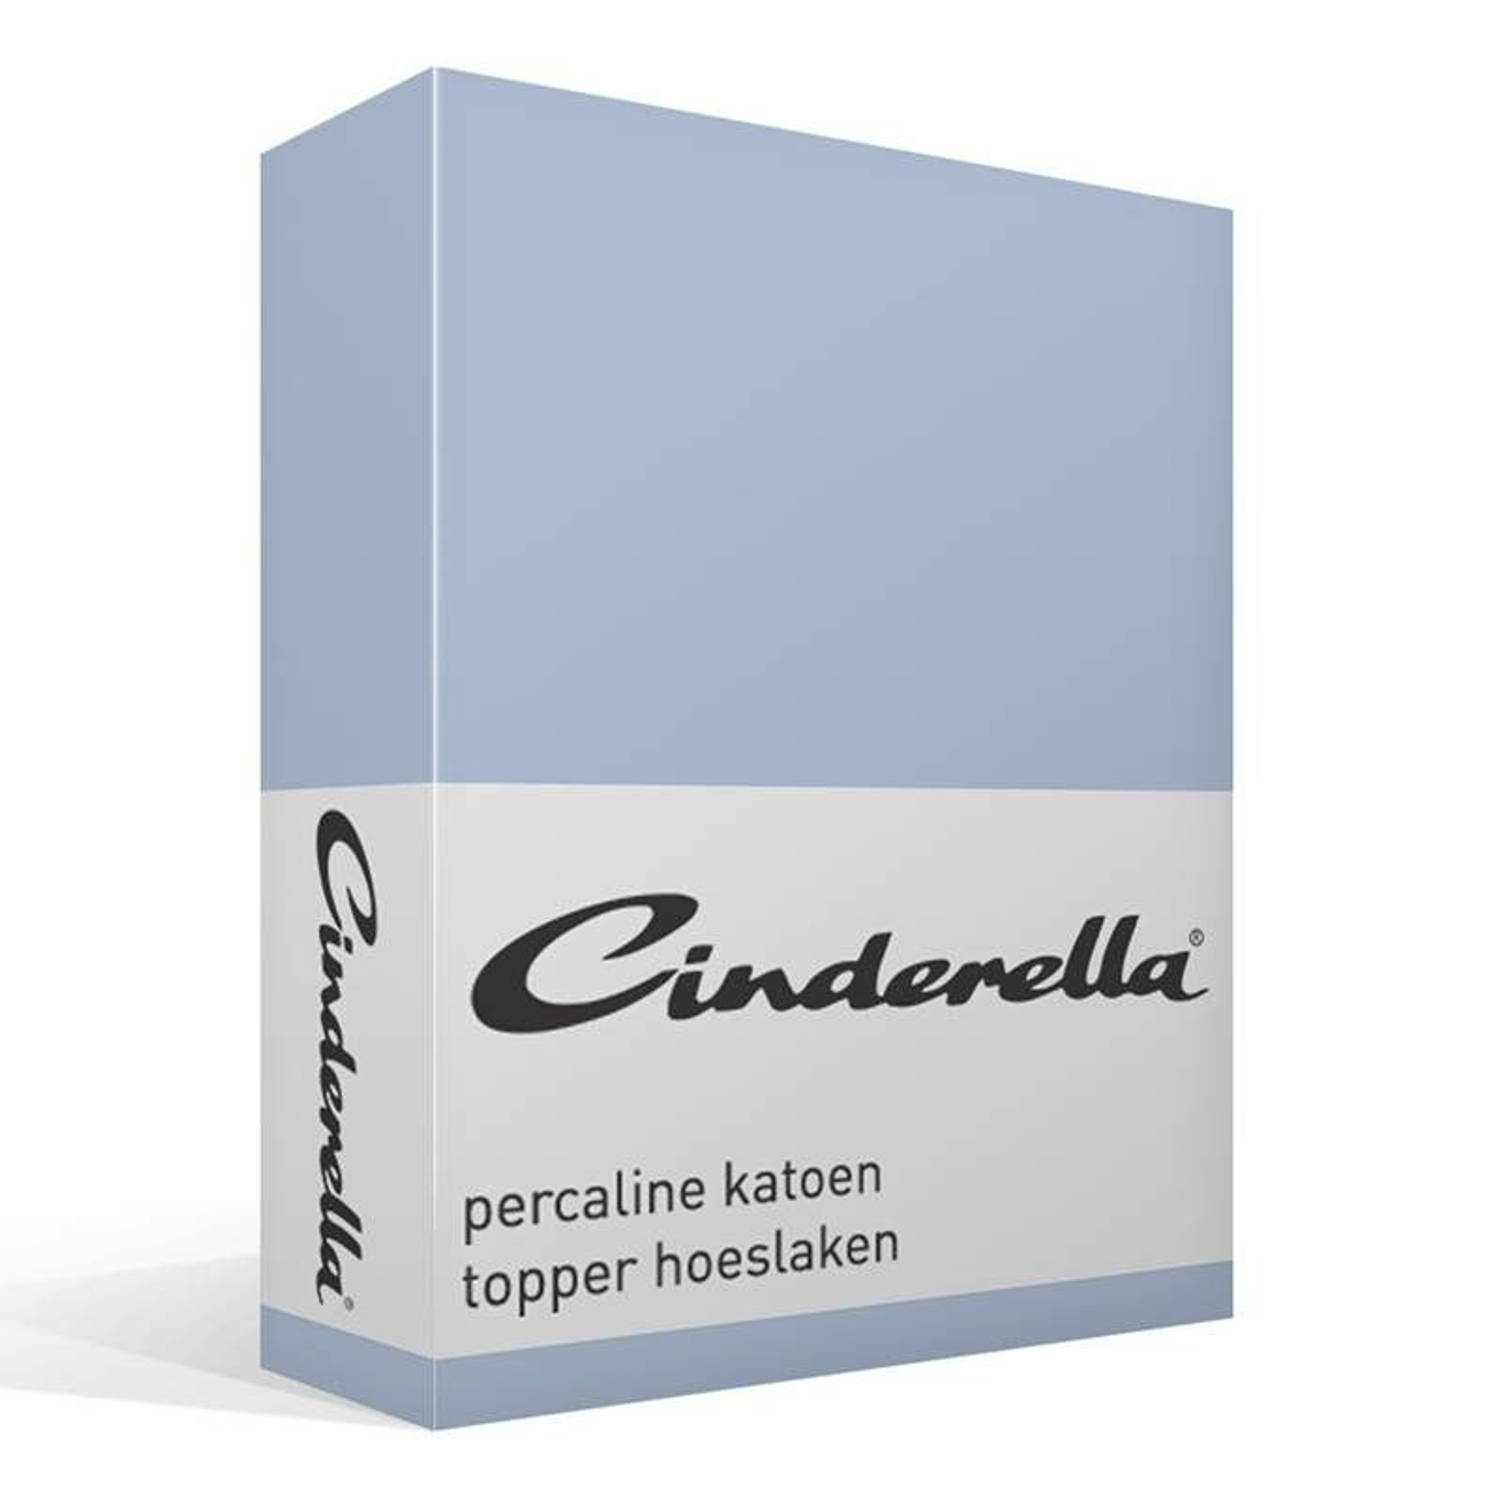 Cinderella basic percaline katoen topper hoeslaken